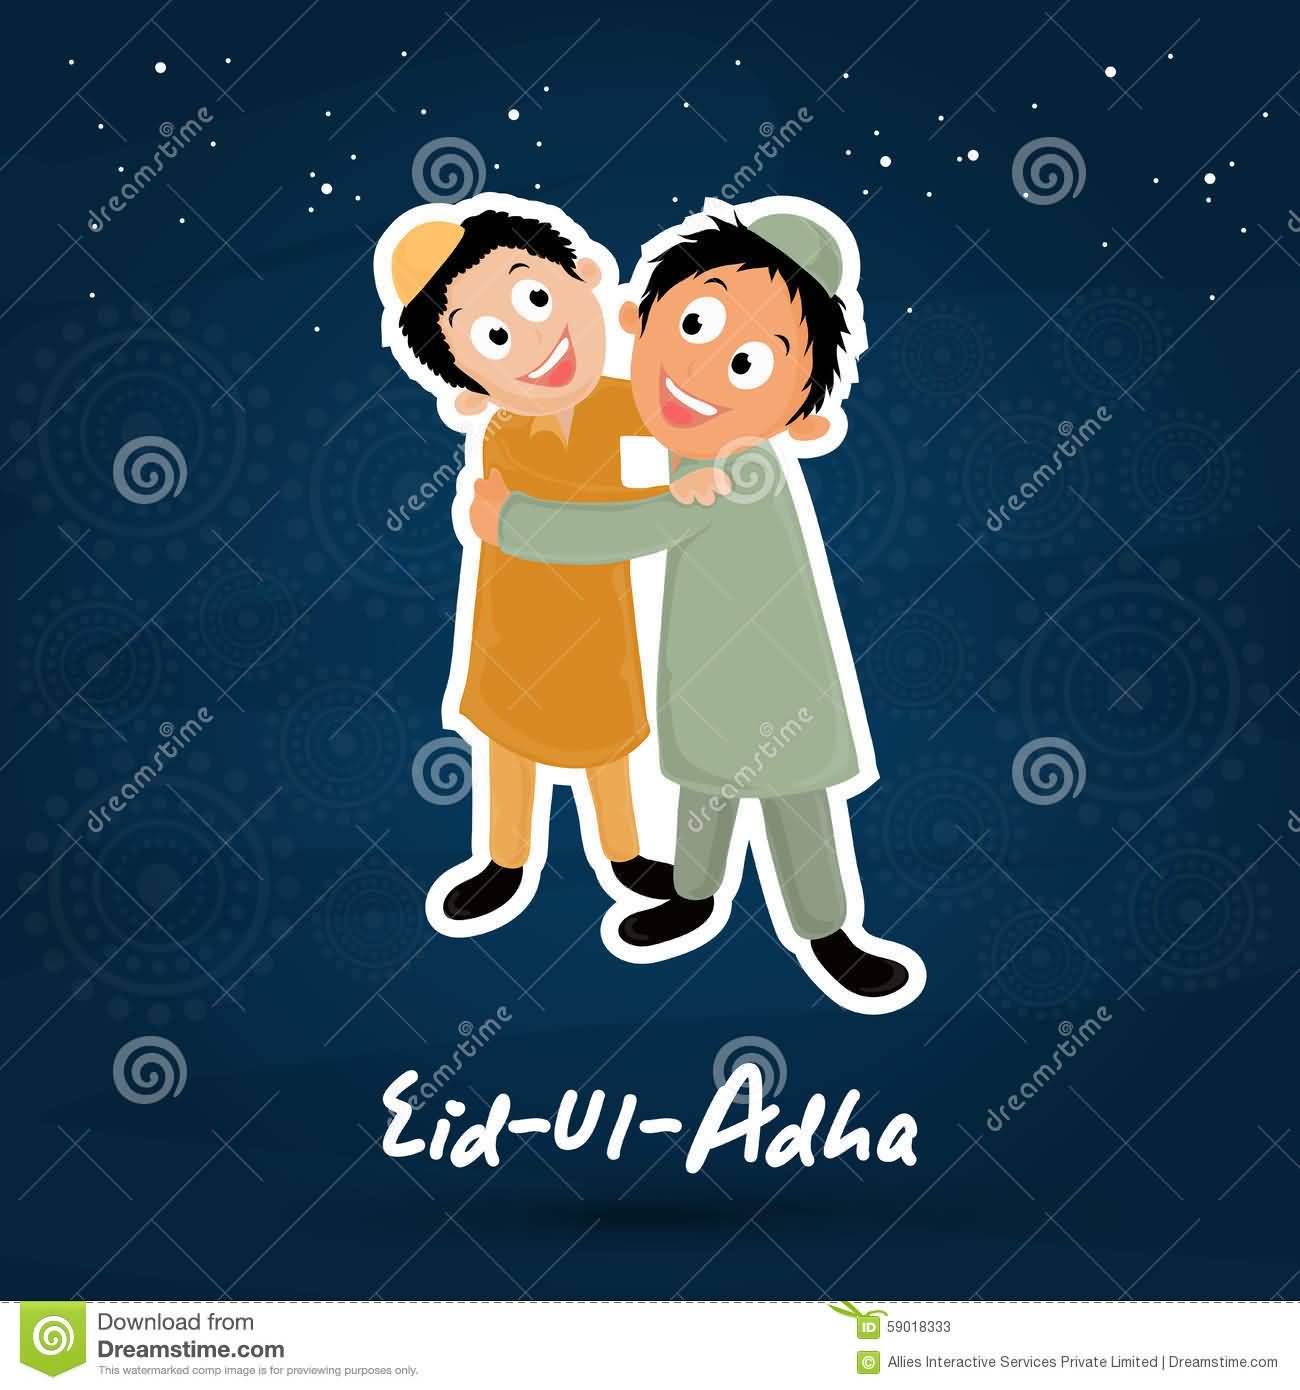 Eid Al Adha Two Muslim Brothers Wishing Each Other By Hugging